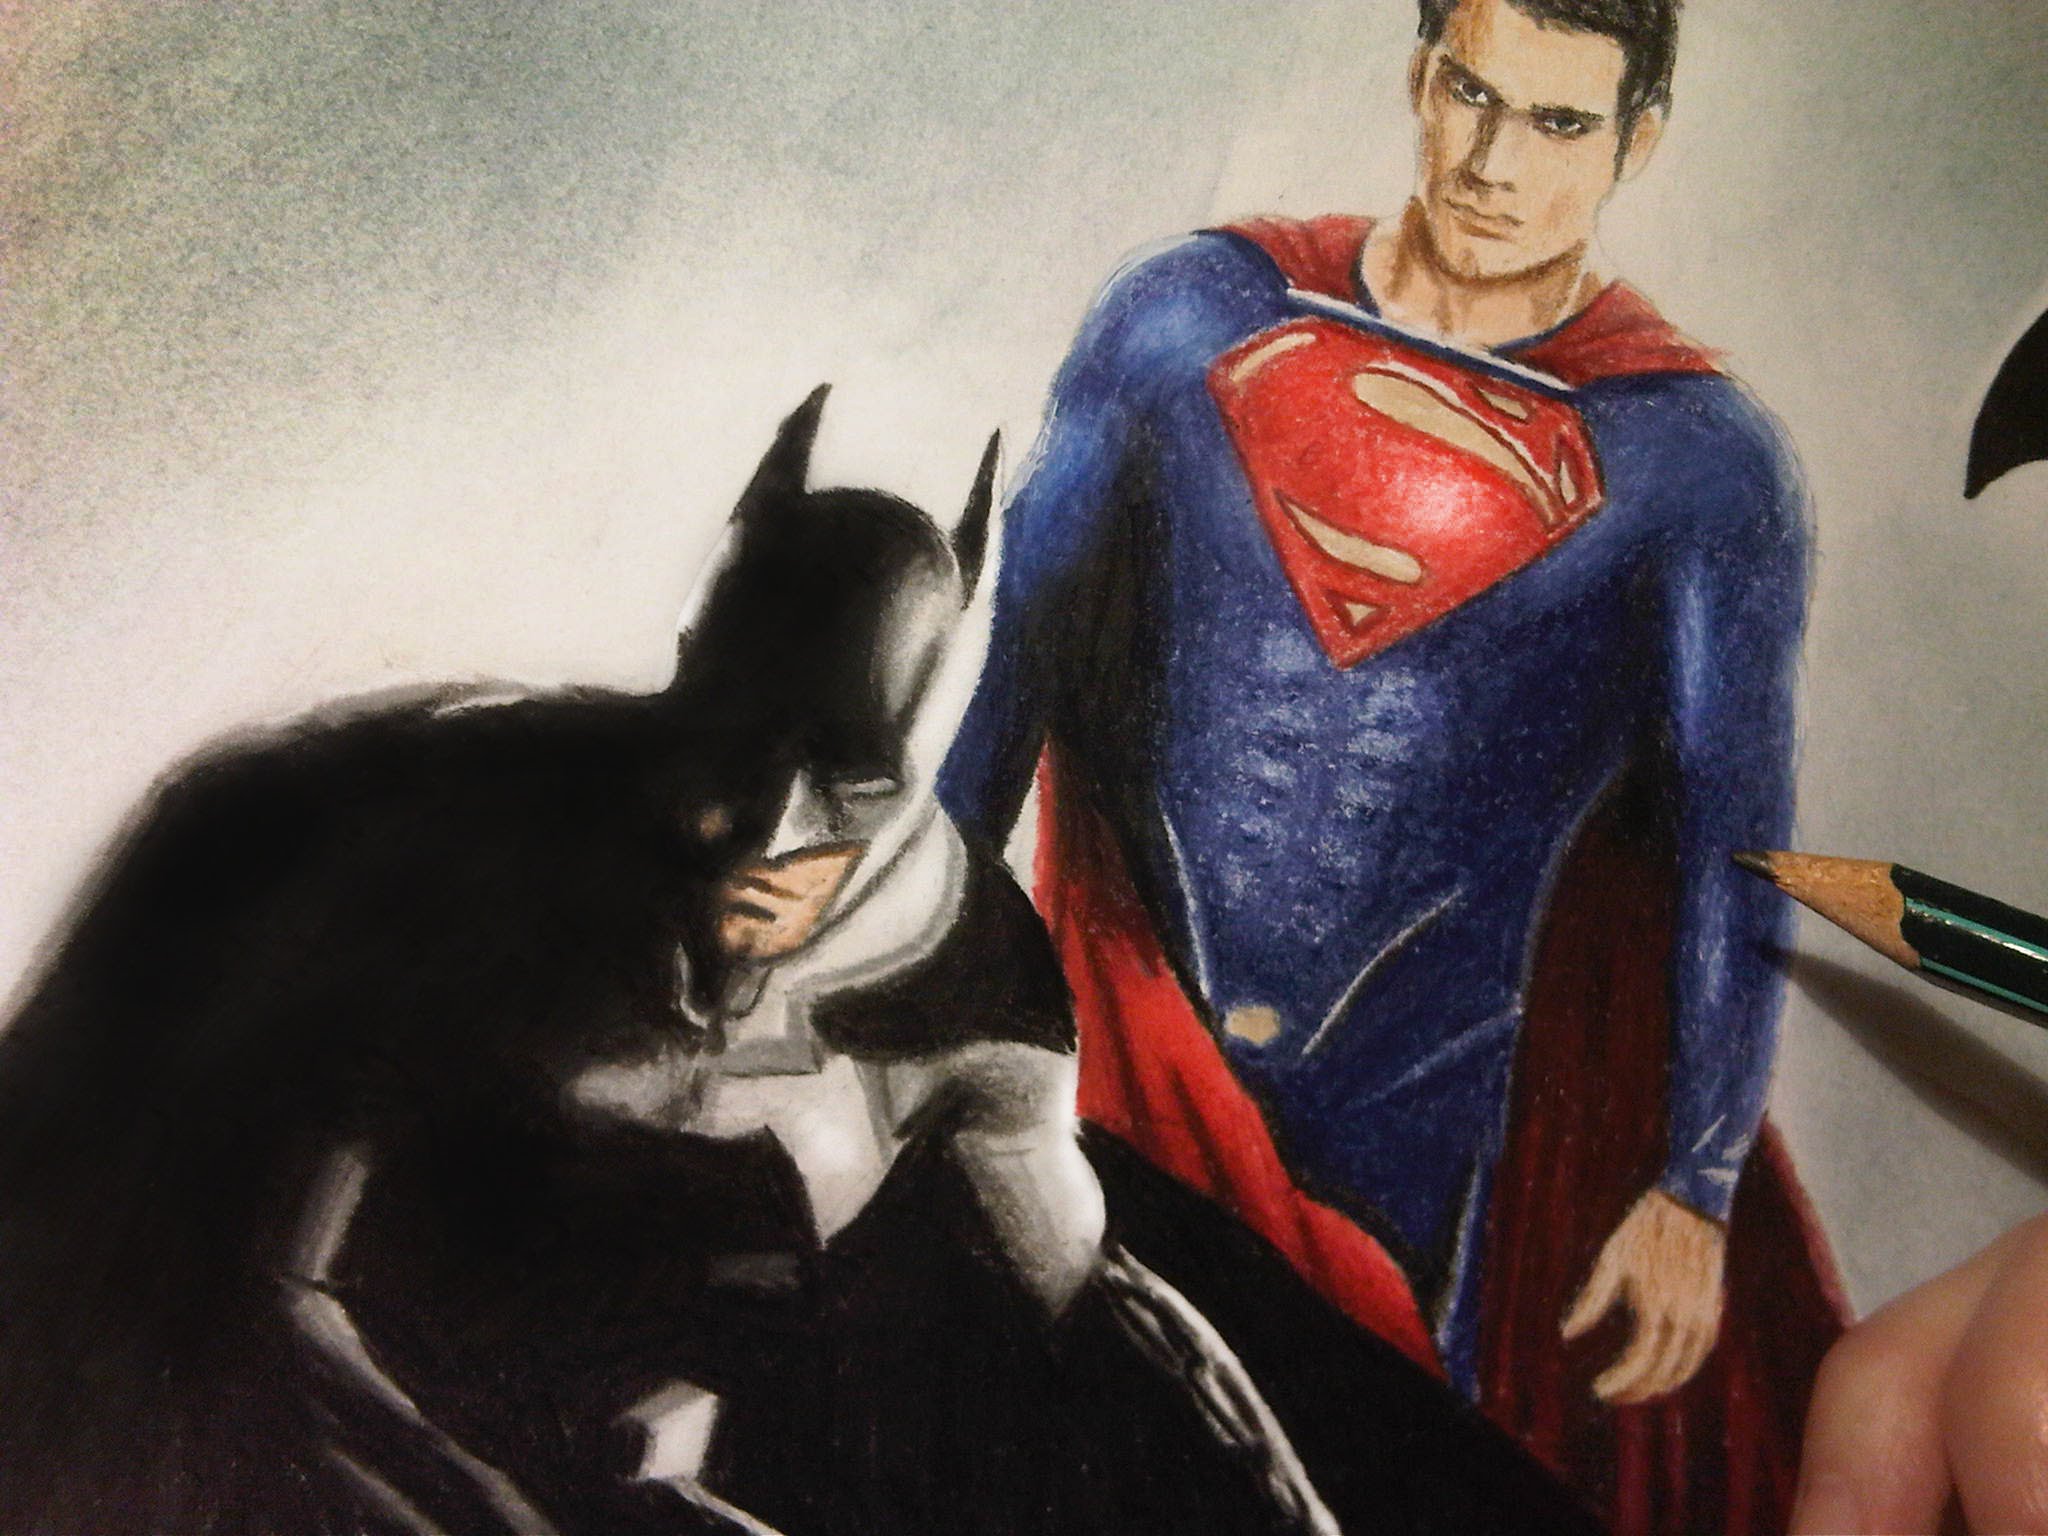 Superman speed up. Рисунки про Супермена и Бэтмена. Супермен и Бэтмен картинка. Супермен и Бэтмен рисунок. Бэтмен против Супермена рисунок.